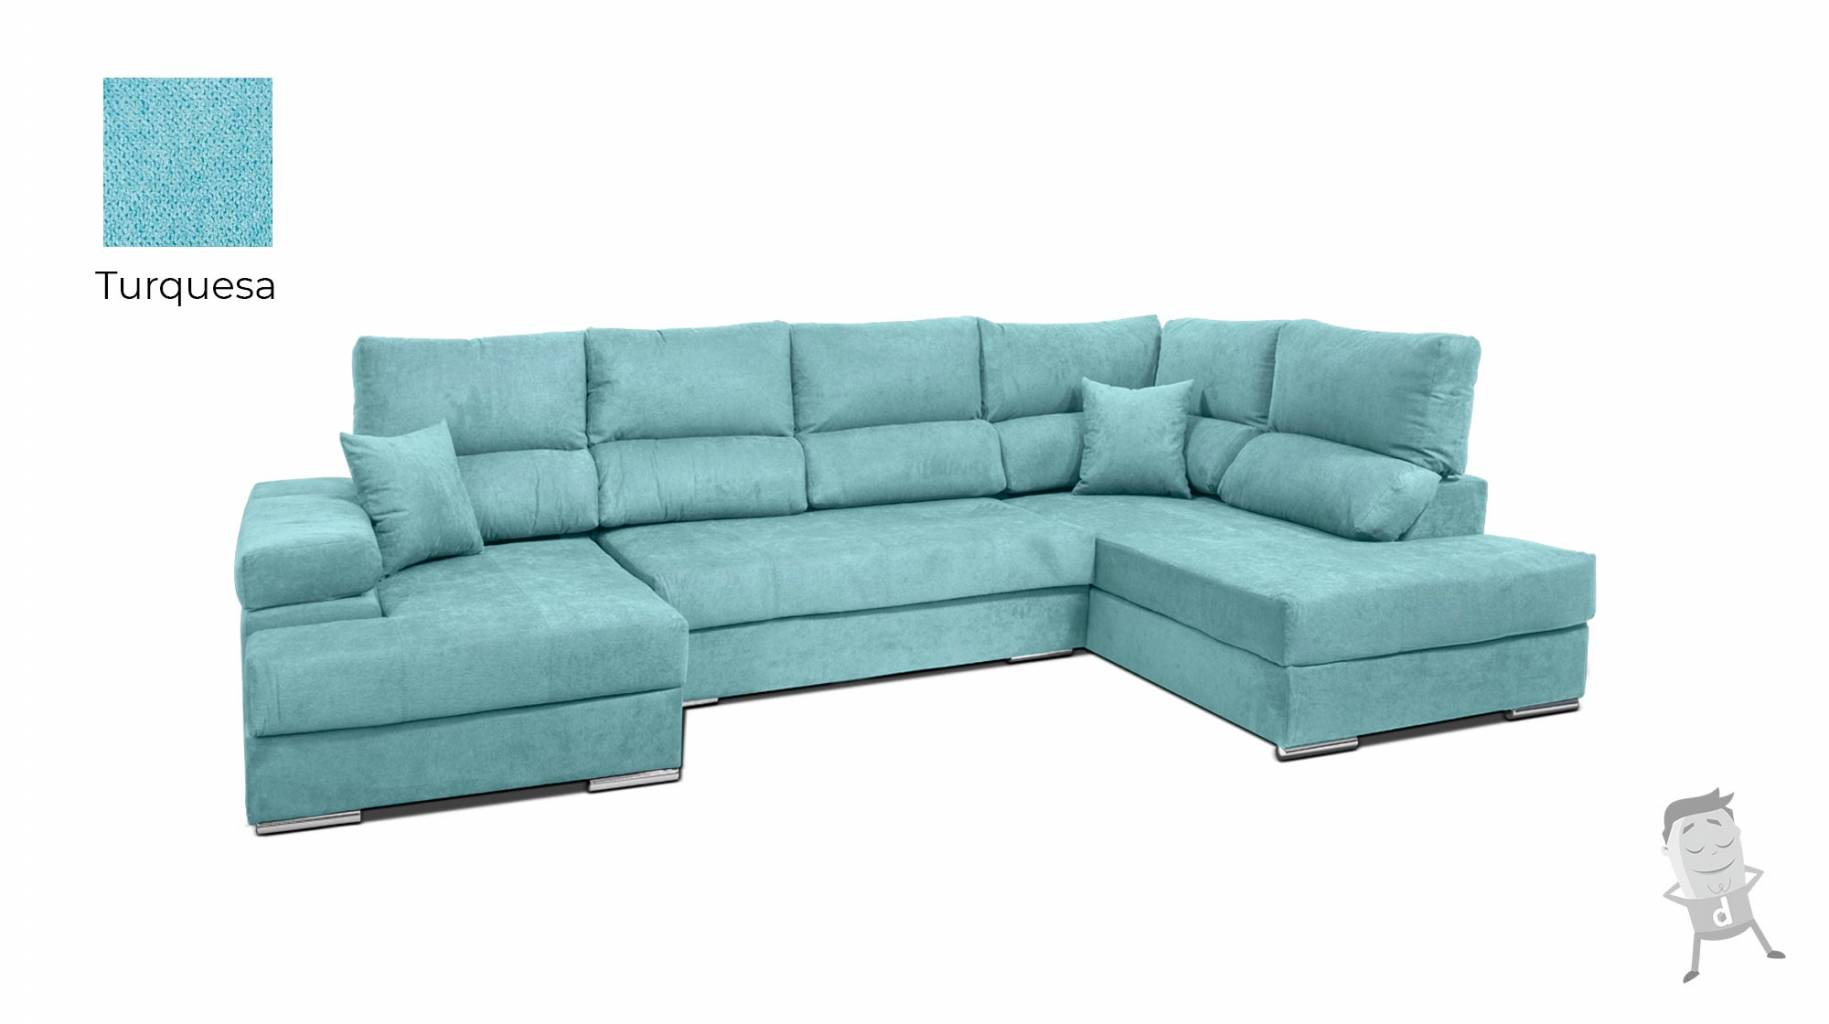 Sofa-Chaise-Longue-Dormitorum-tapizado-en-tela-color-azul-turquesa